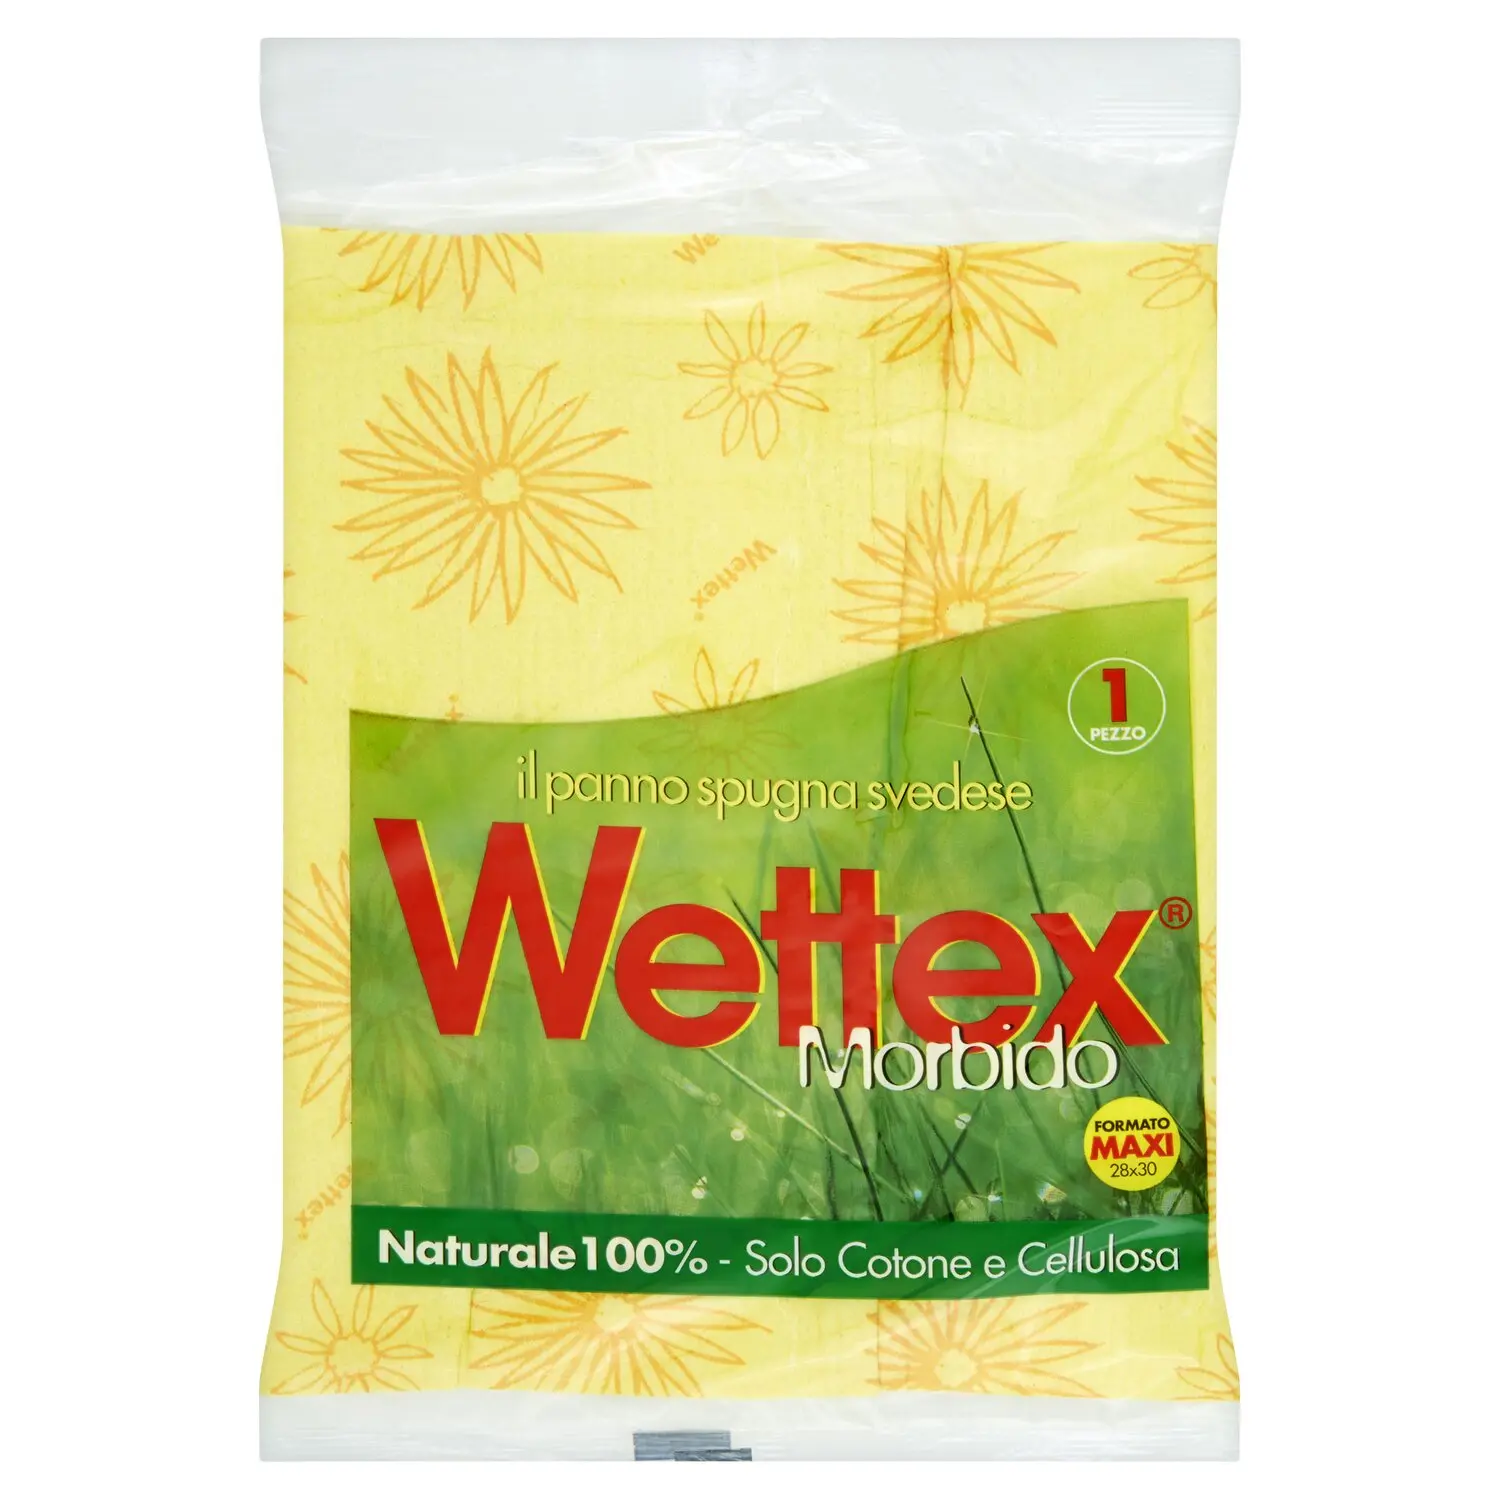 Wettex Panno Salvalavello Formato Maxi 28 X41cm